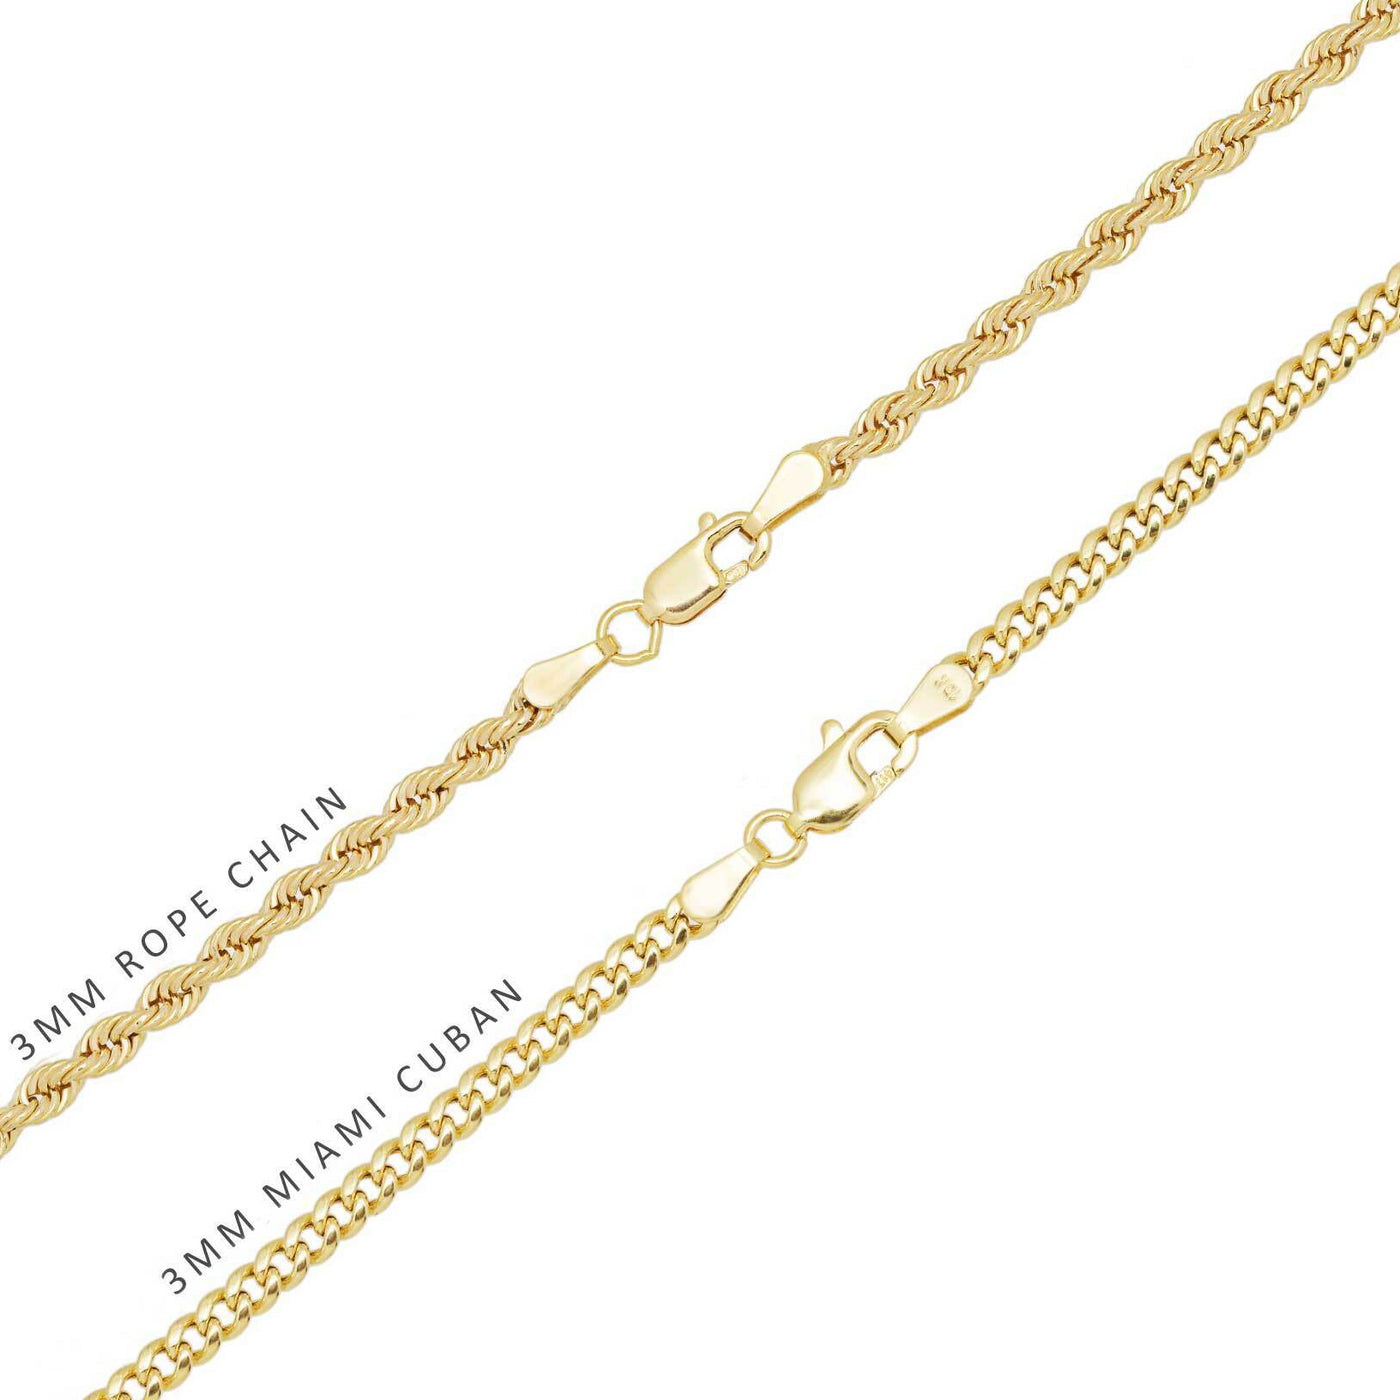 2 3/4" Puffed Gucci Jesus Crucifix Pendant & Chain Necklace Set 10K Yellow White Gold